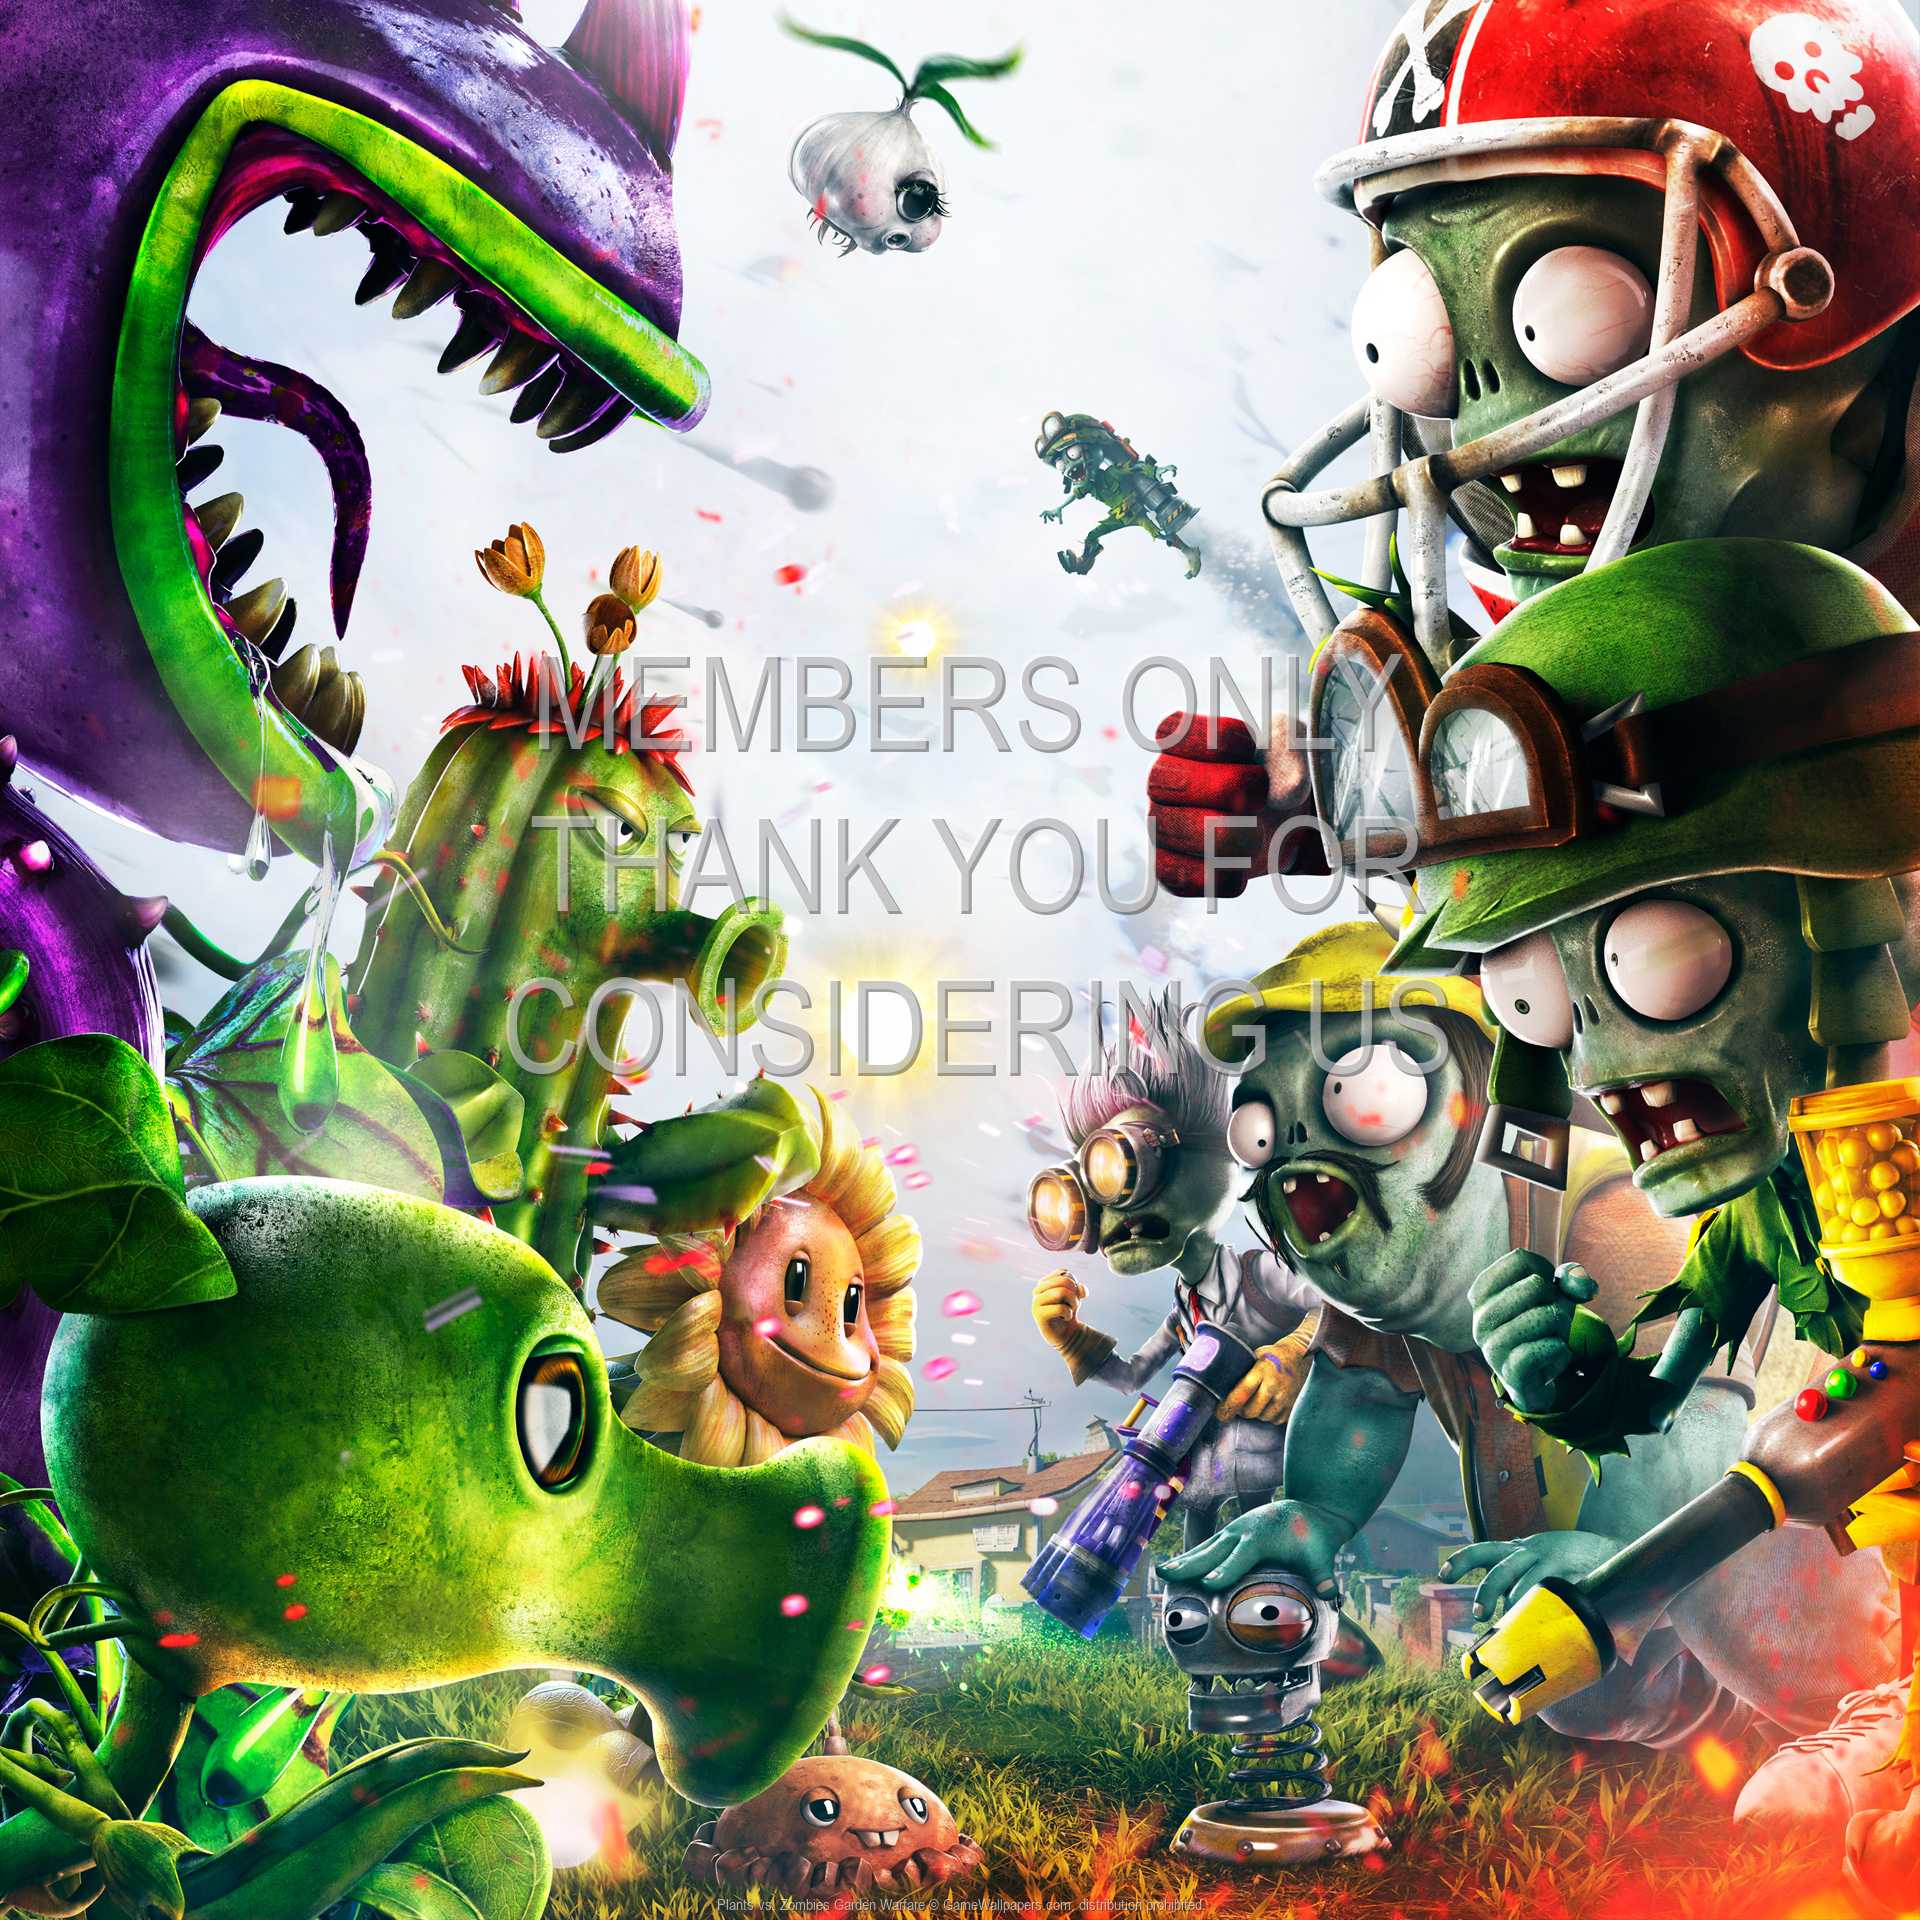 Plants vs. Zombies: Garden Warfare 1080p Horizontal Mobile wallpaper or background 01